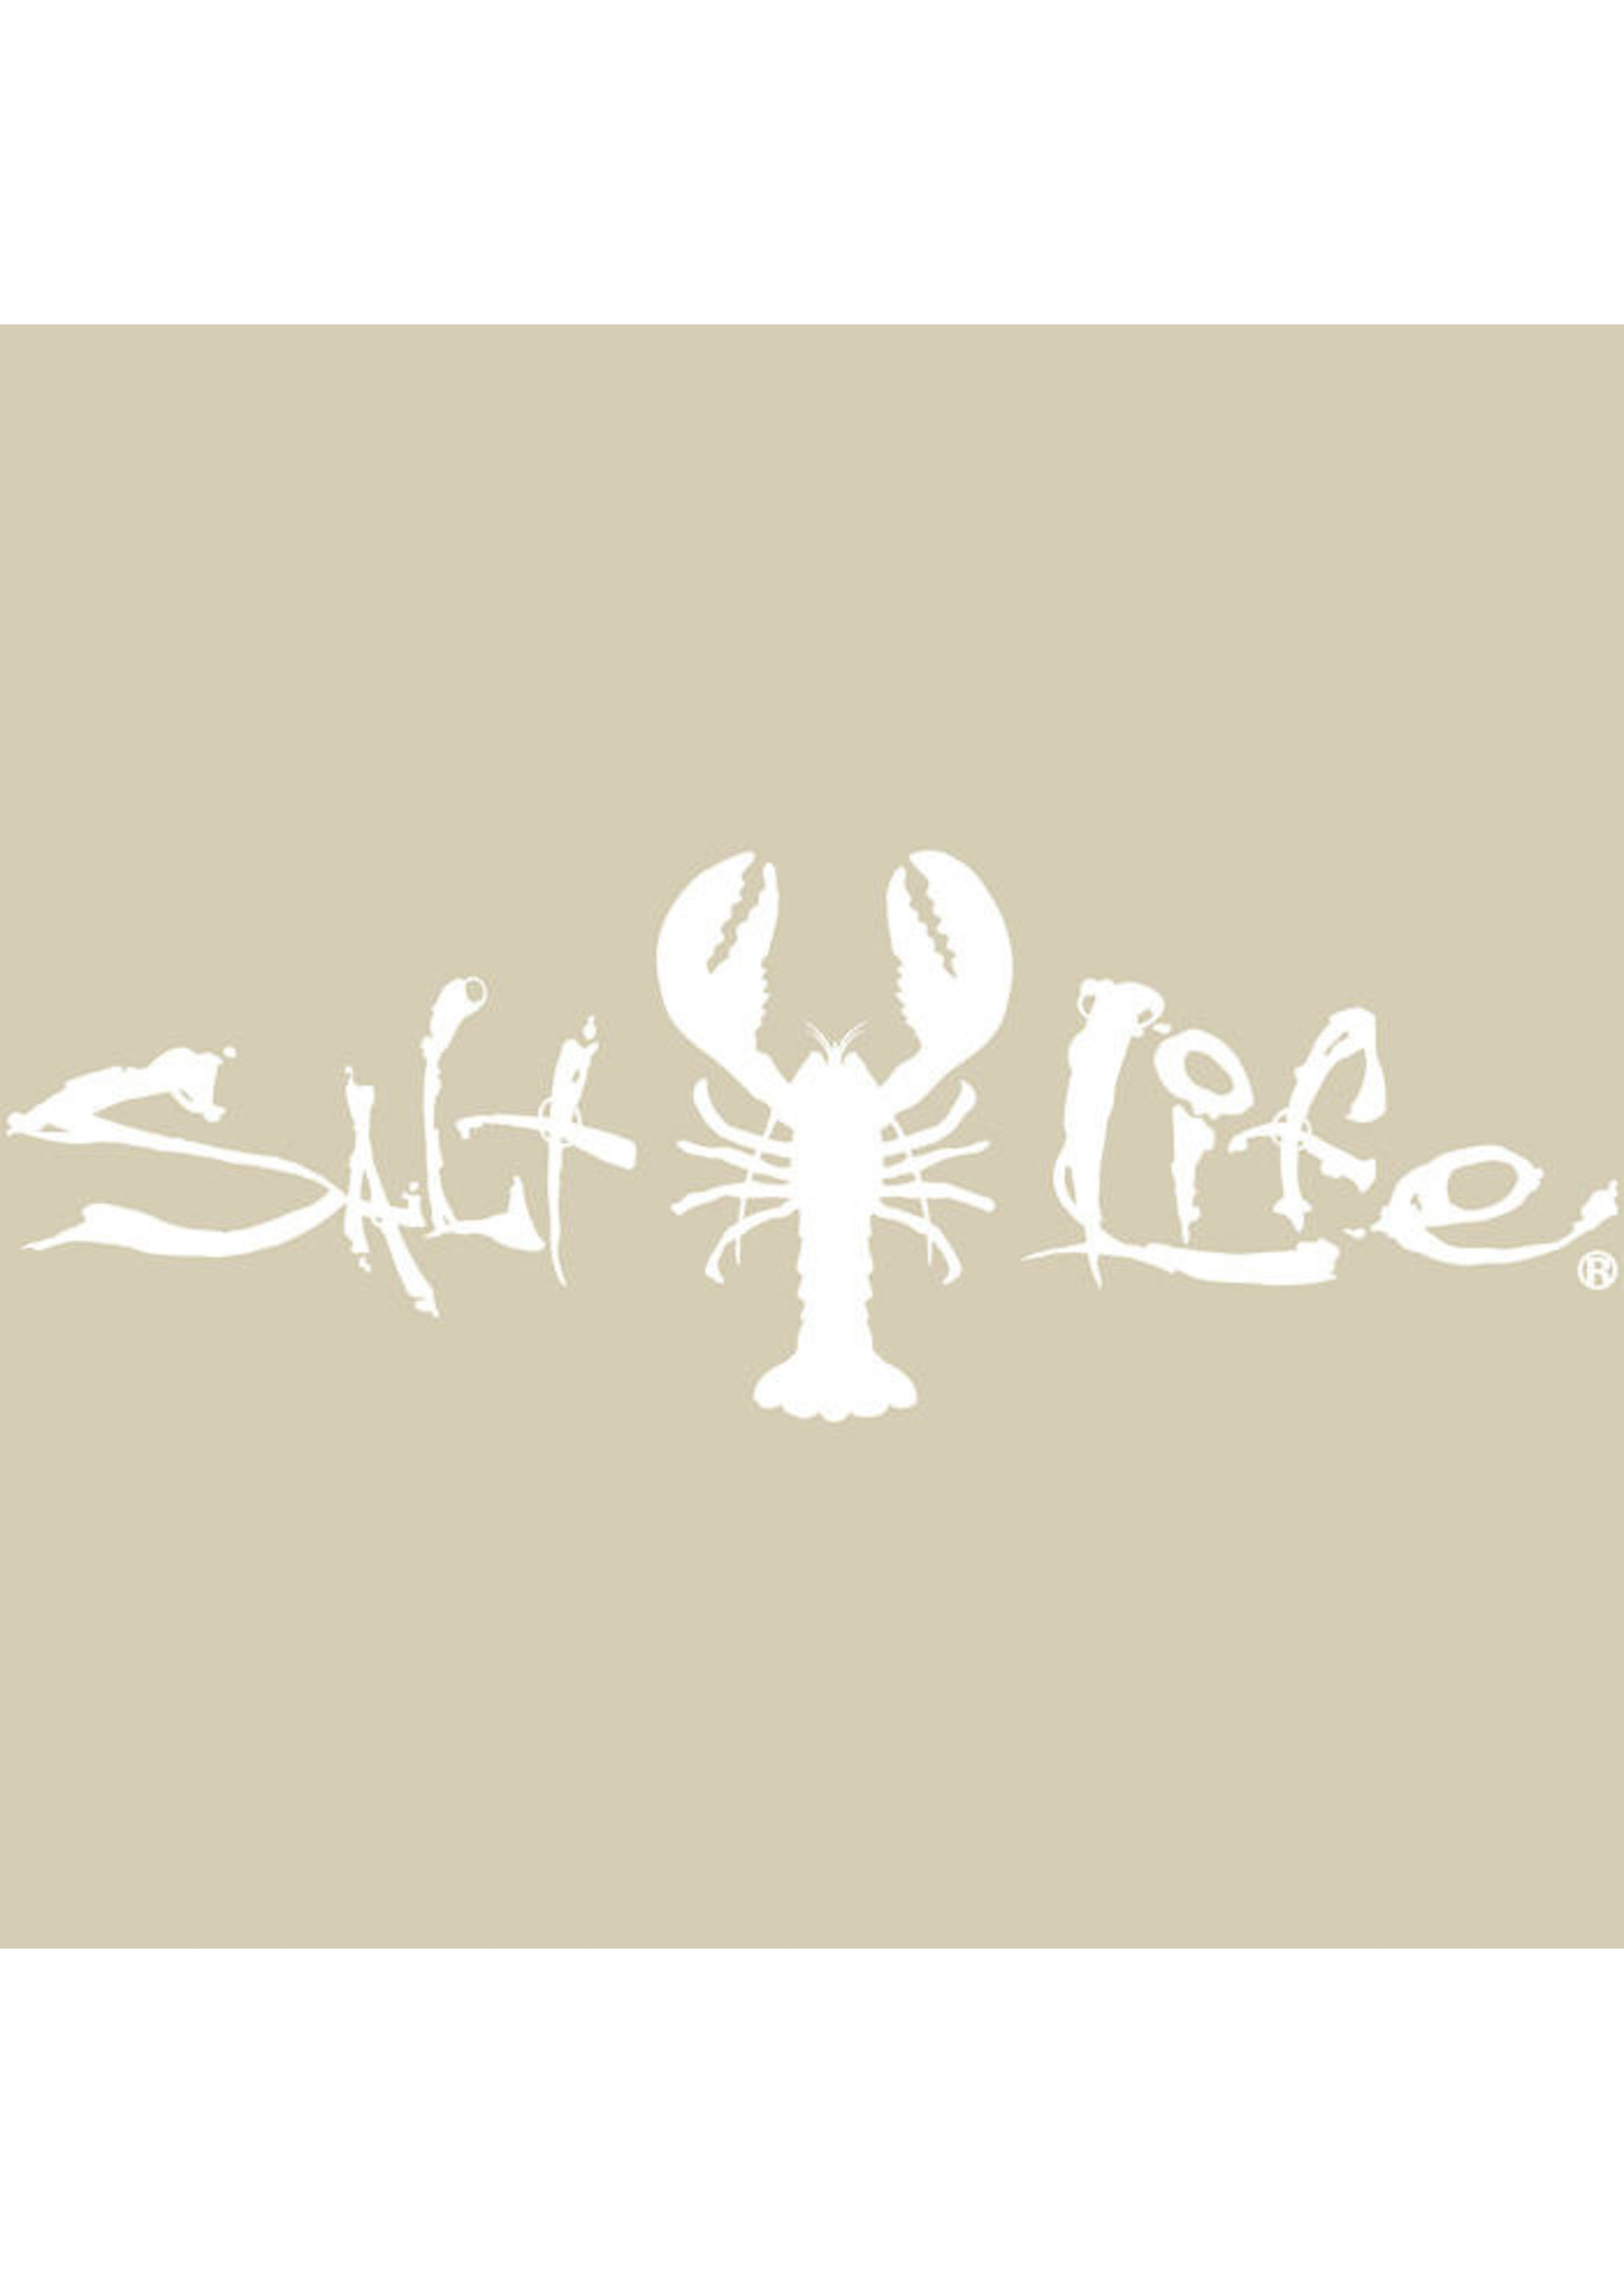 Salt Life Signature Lobster Small Decal